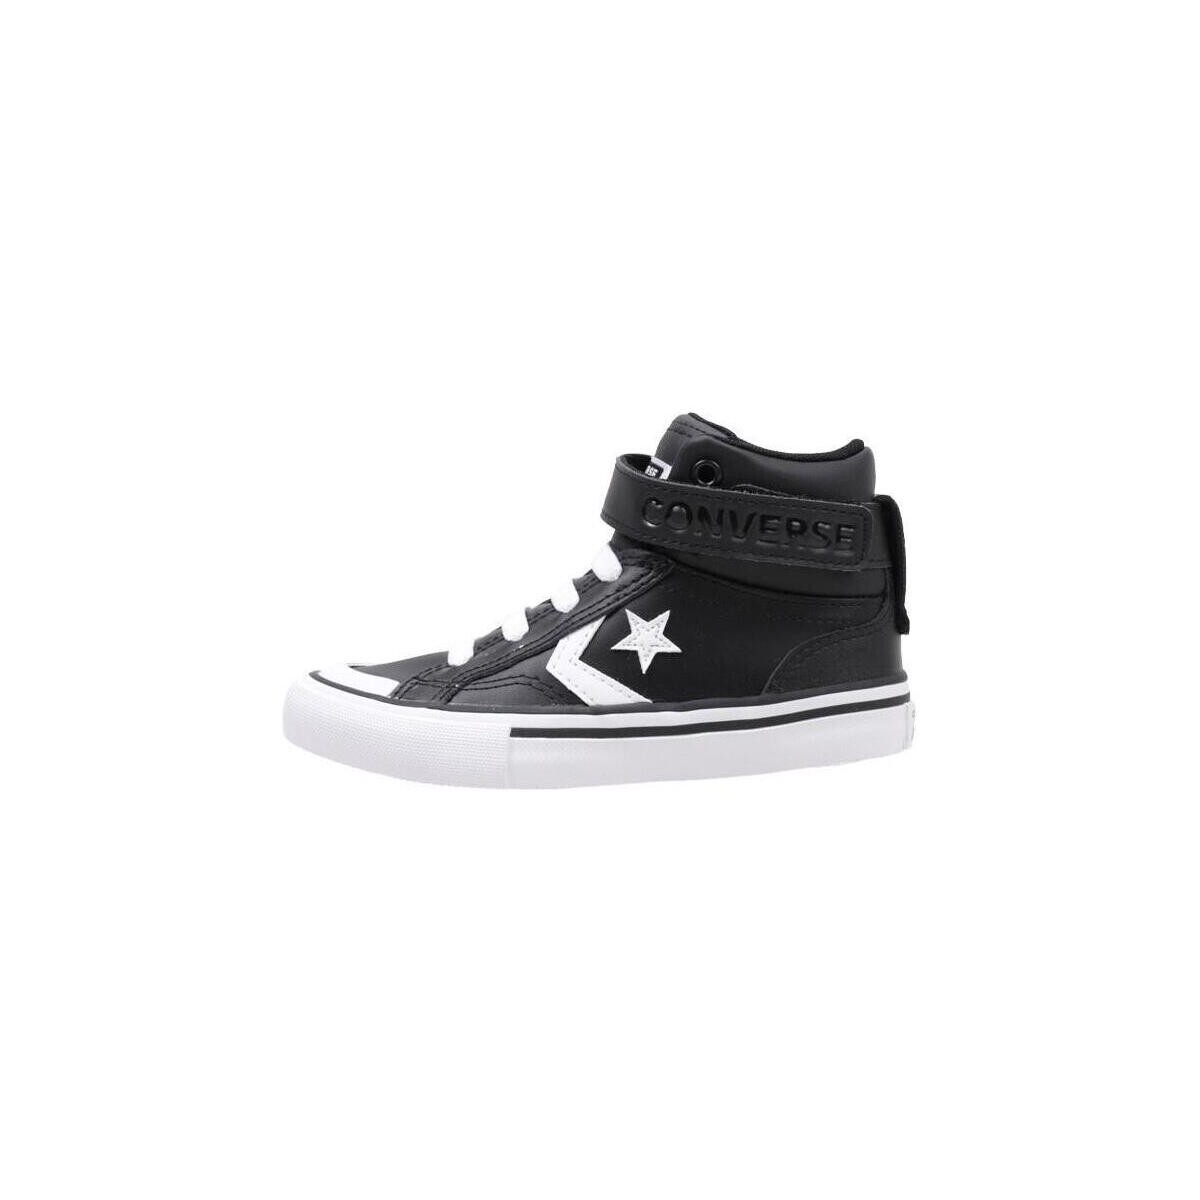 Converse PRO BLAZE STRAP LEATHER Schwarz - Schuhe Sneaker High Kind 51,00 €